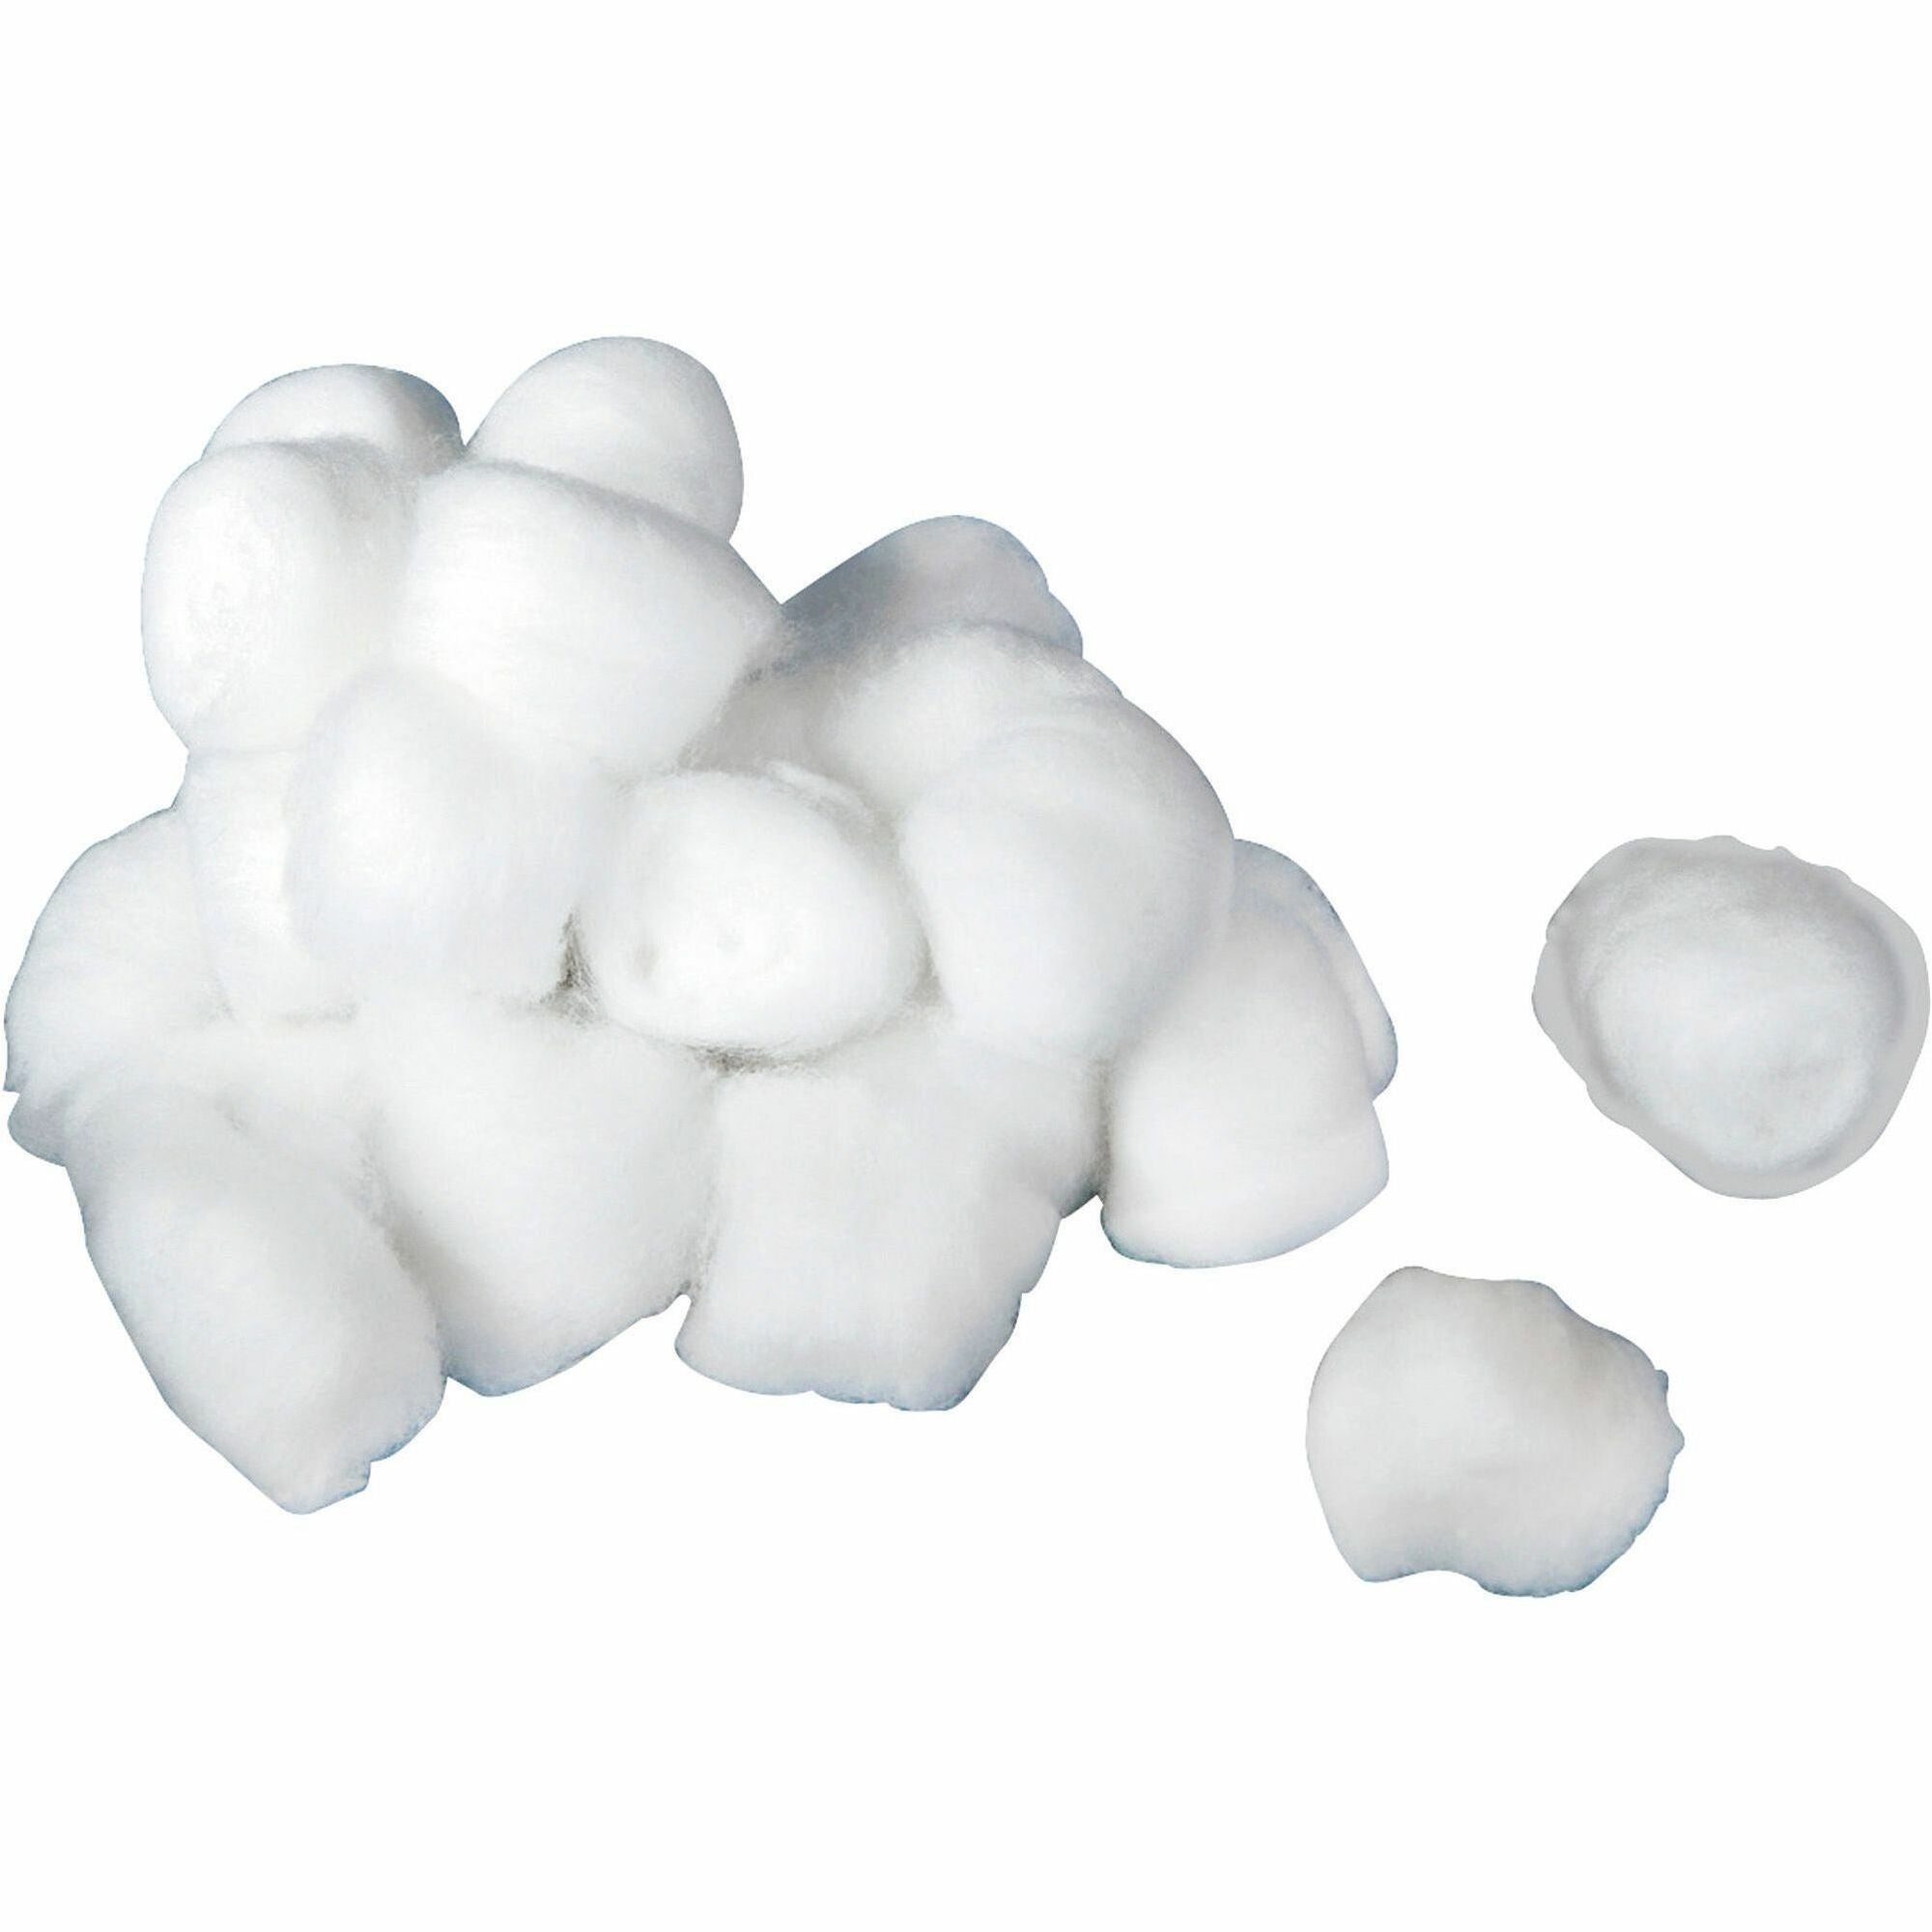 Medline Nonsterile Cotton Balls - Large - 1000 / Pack - 100% Cotton - White - 